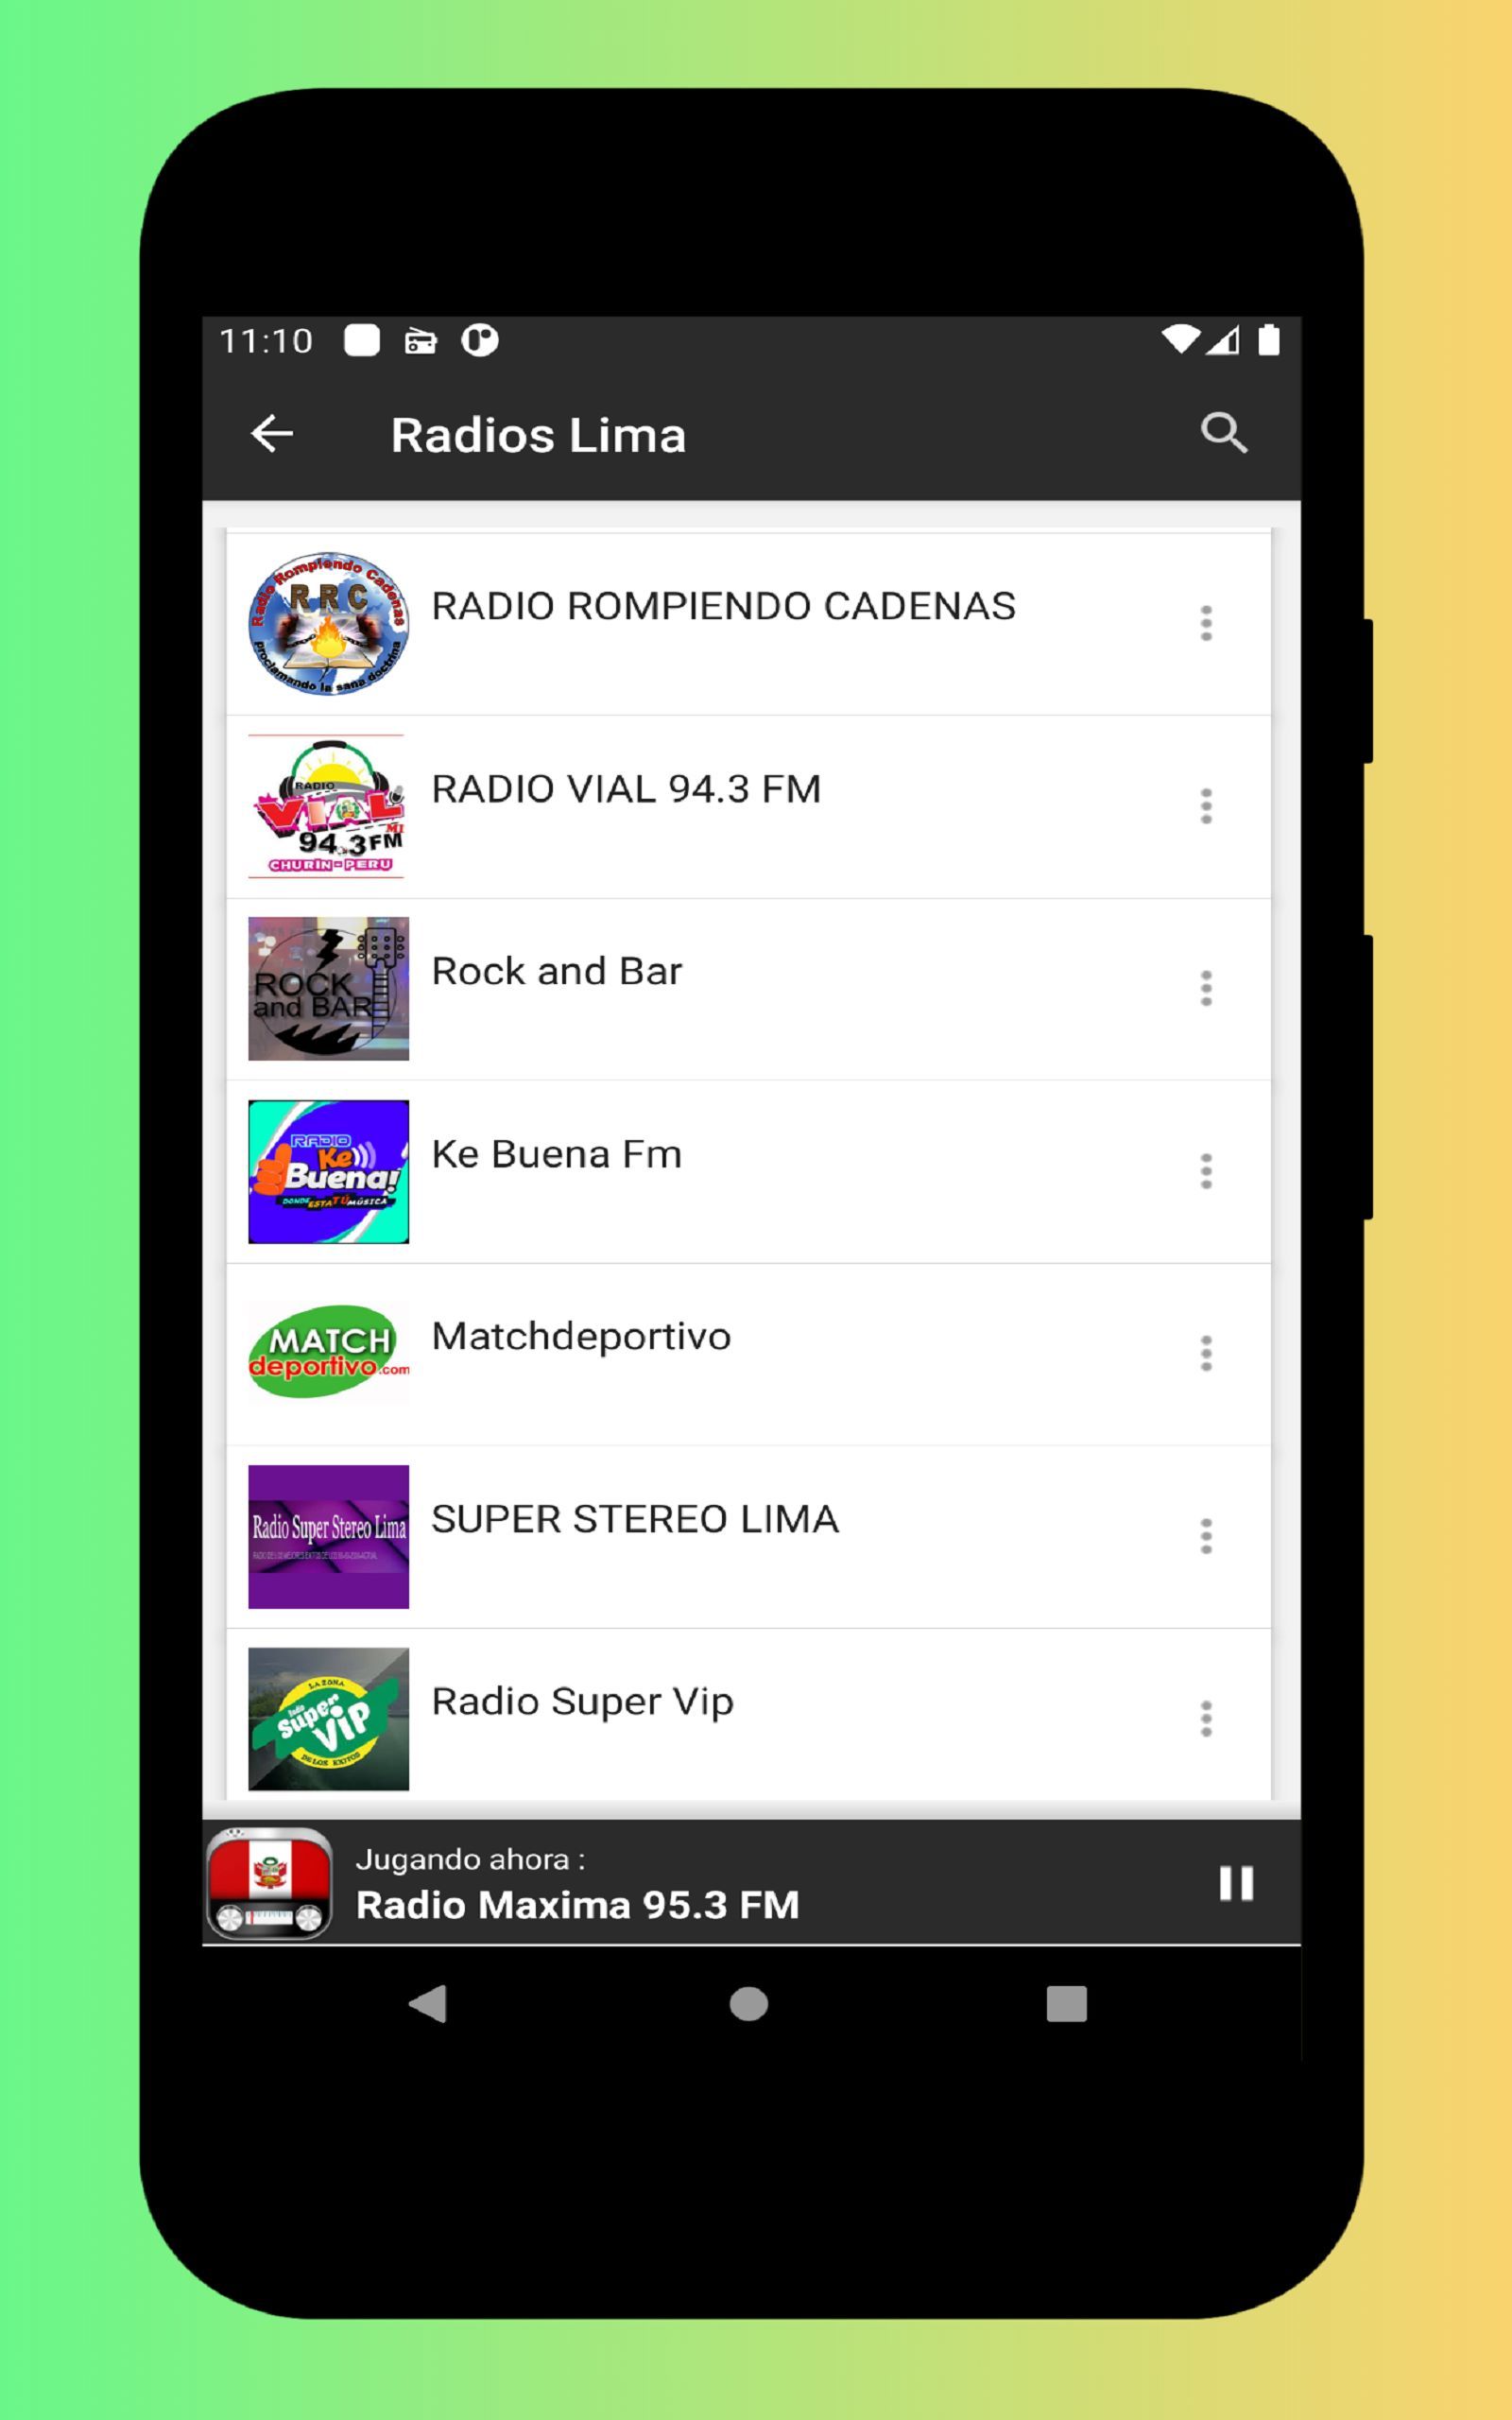 Radio Peru - Radio Peru FM - Peru Radio Stations to Listen to for Free on Telephone and Tablet